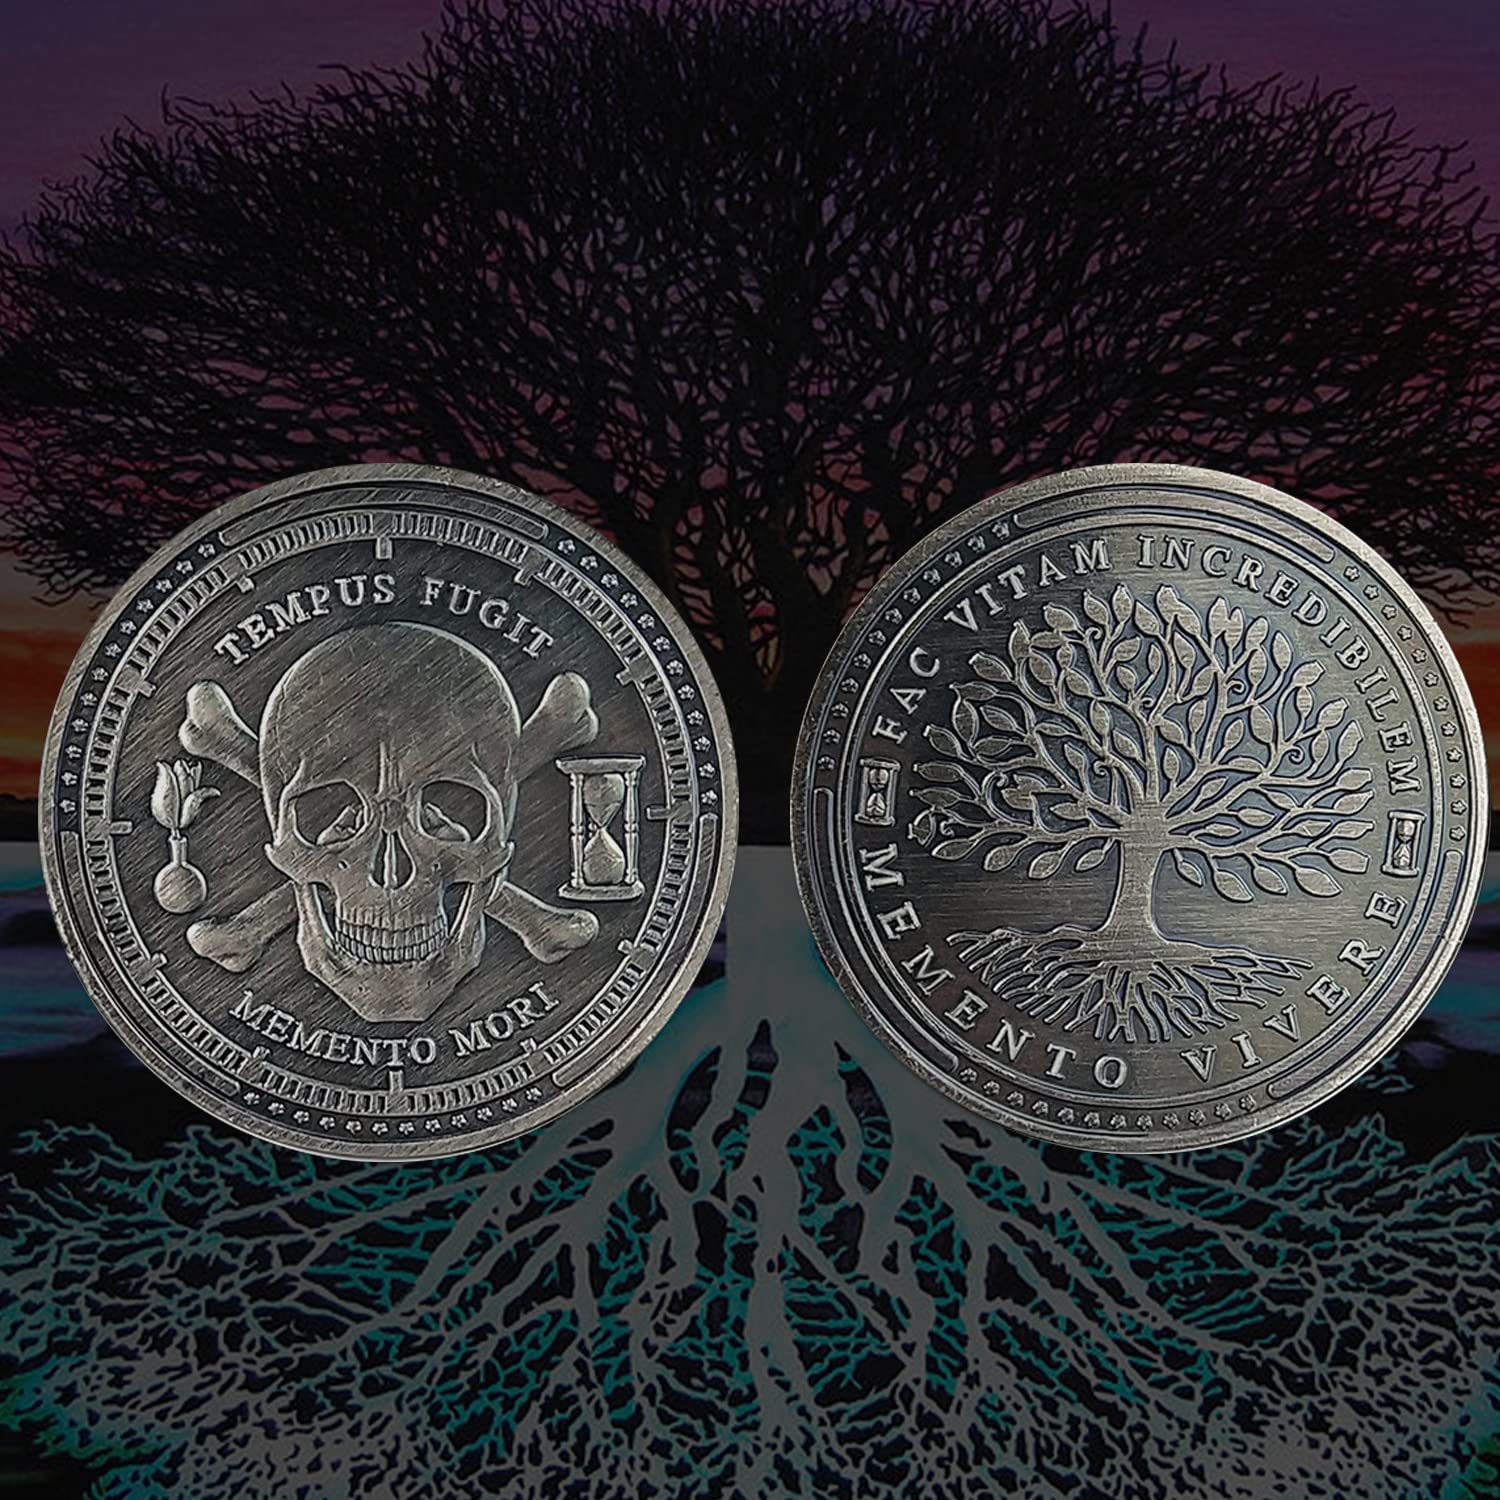 Memento Mori Memento Vivere Coin Stoic Reminder Token Skull Challenge Coin